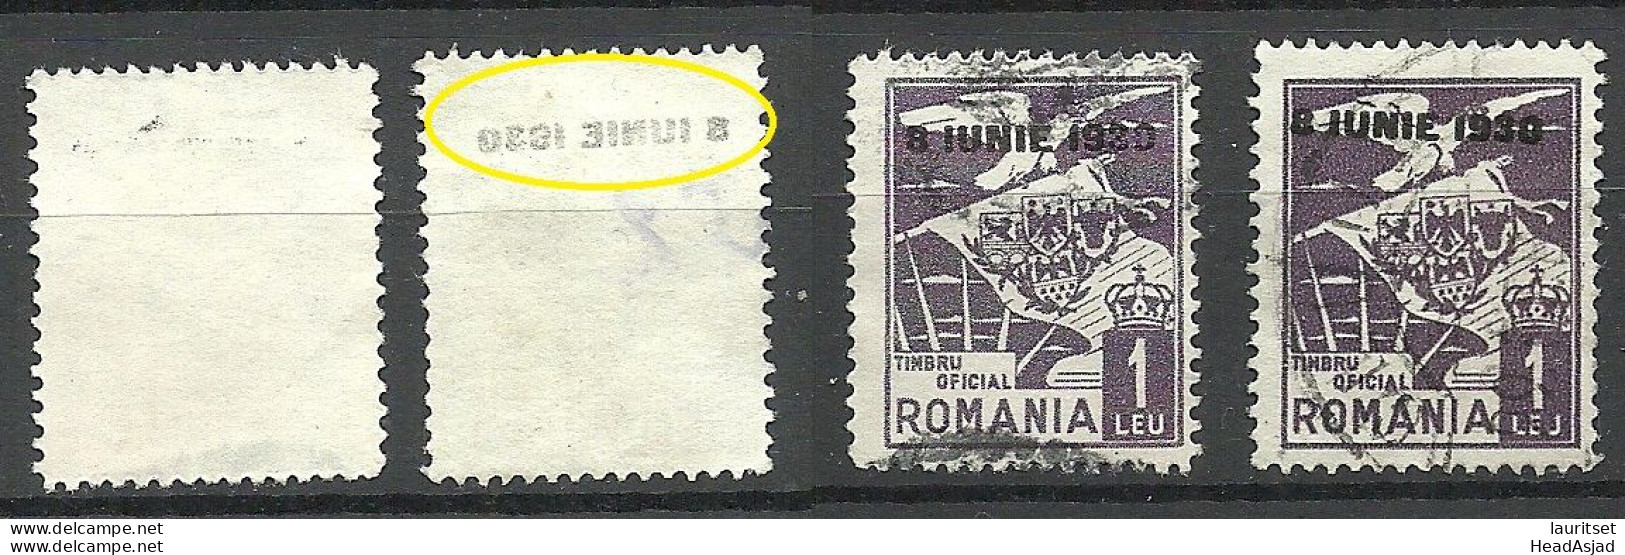 ROMANIA Rumänien 1930 Dienstmarke Normal + Variety Set Off Of OPT Abklatsch D. Aufdruckes - Service